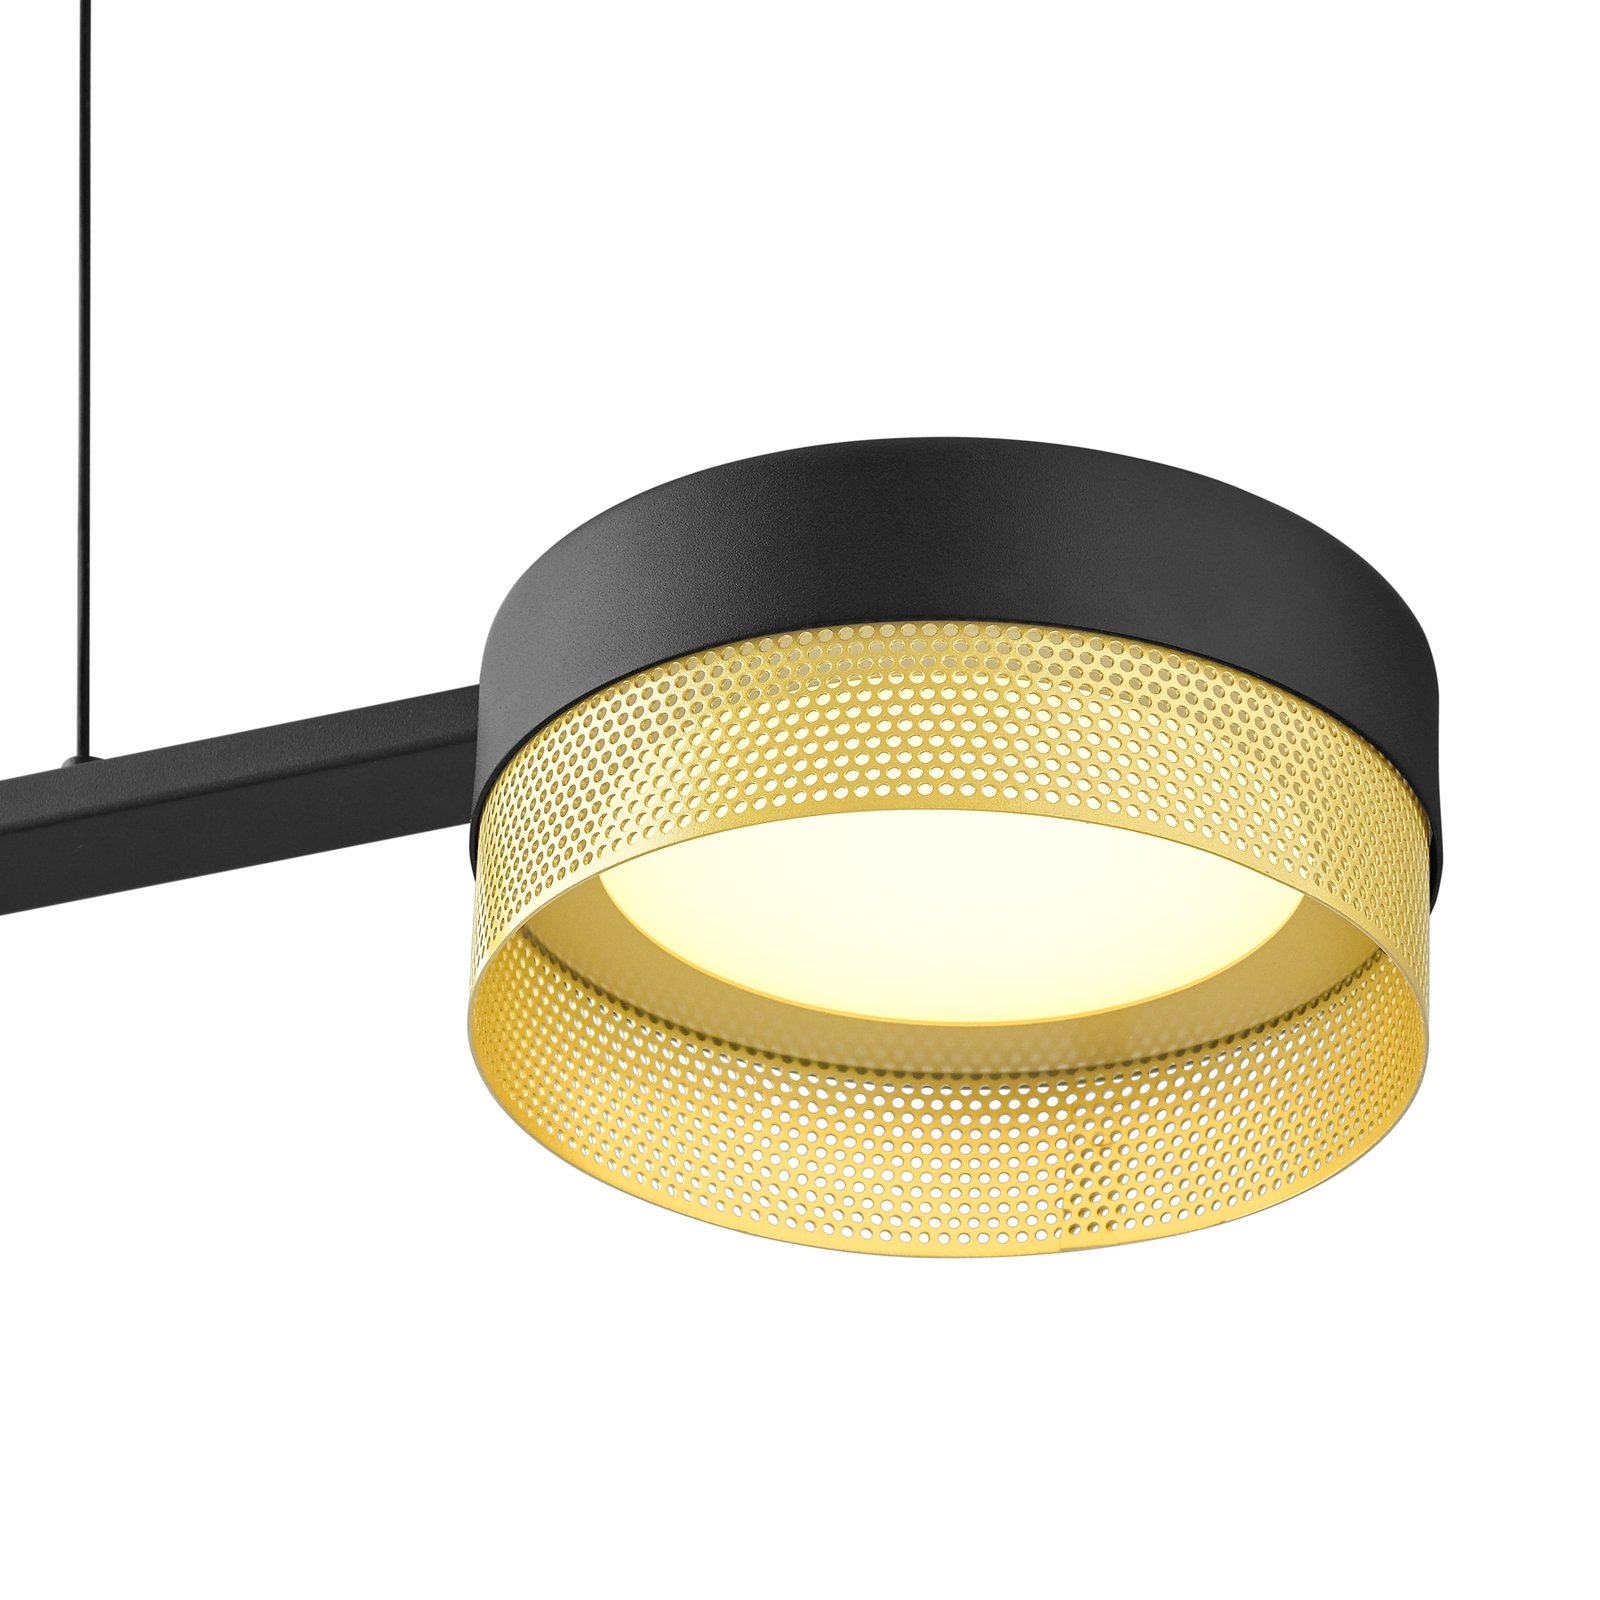 LED-hänglampa Mesh 3 lampor dimmer svart/guld